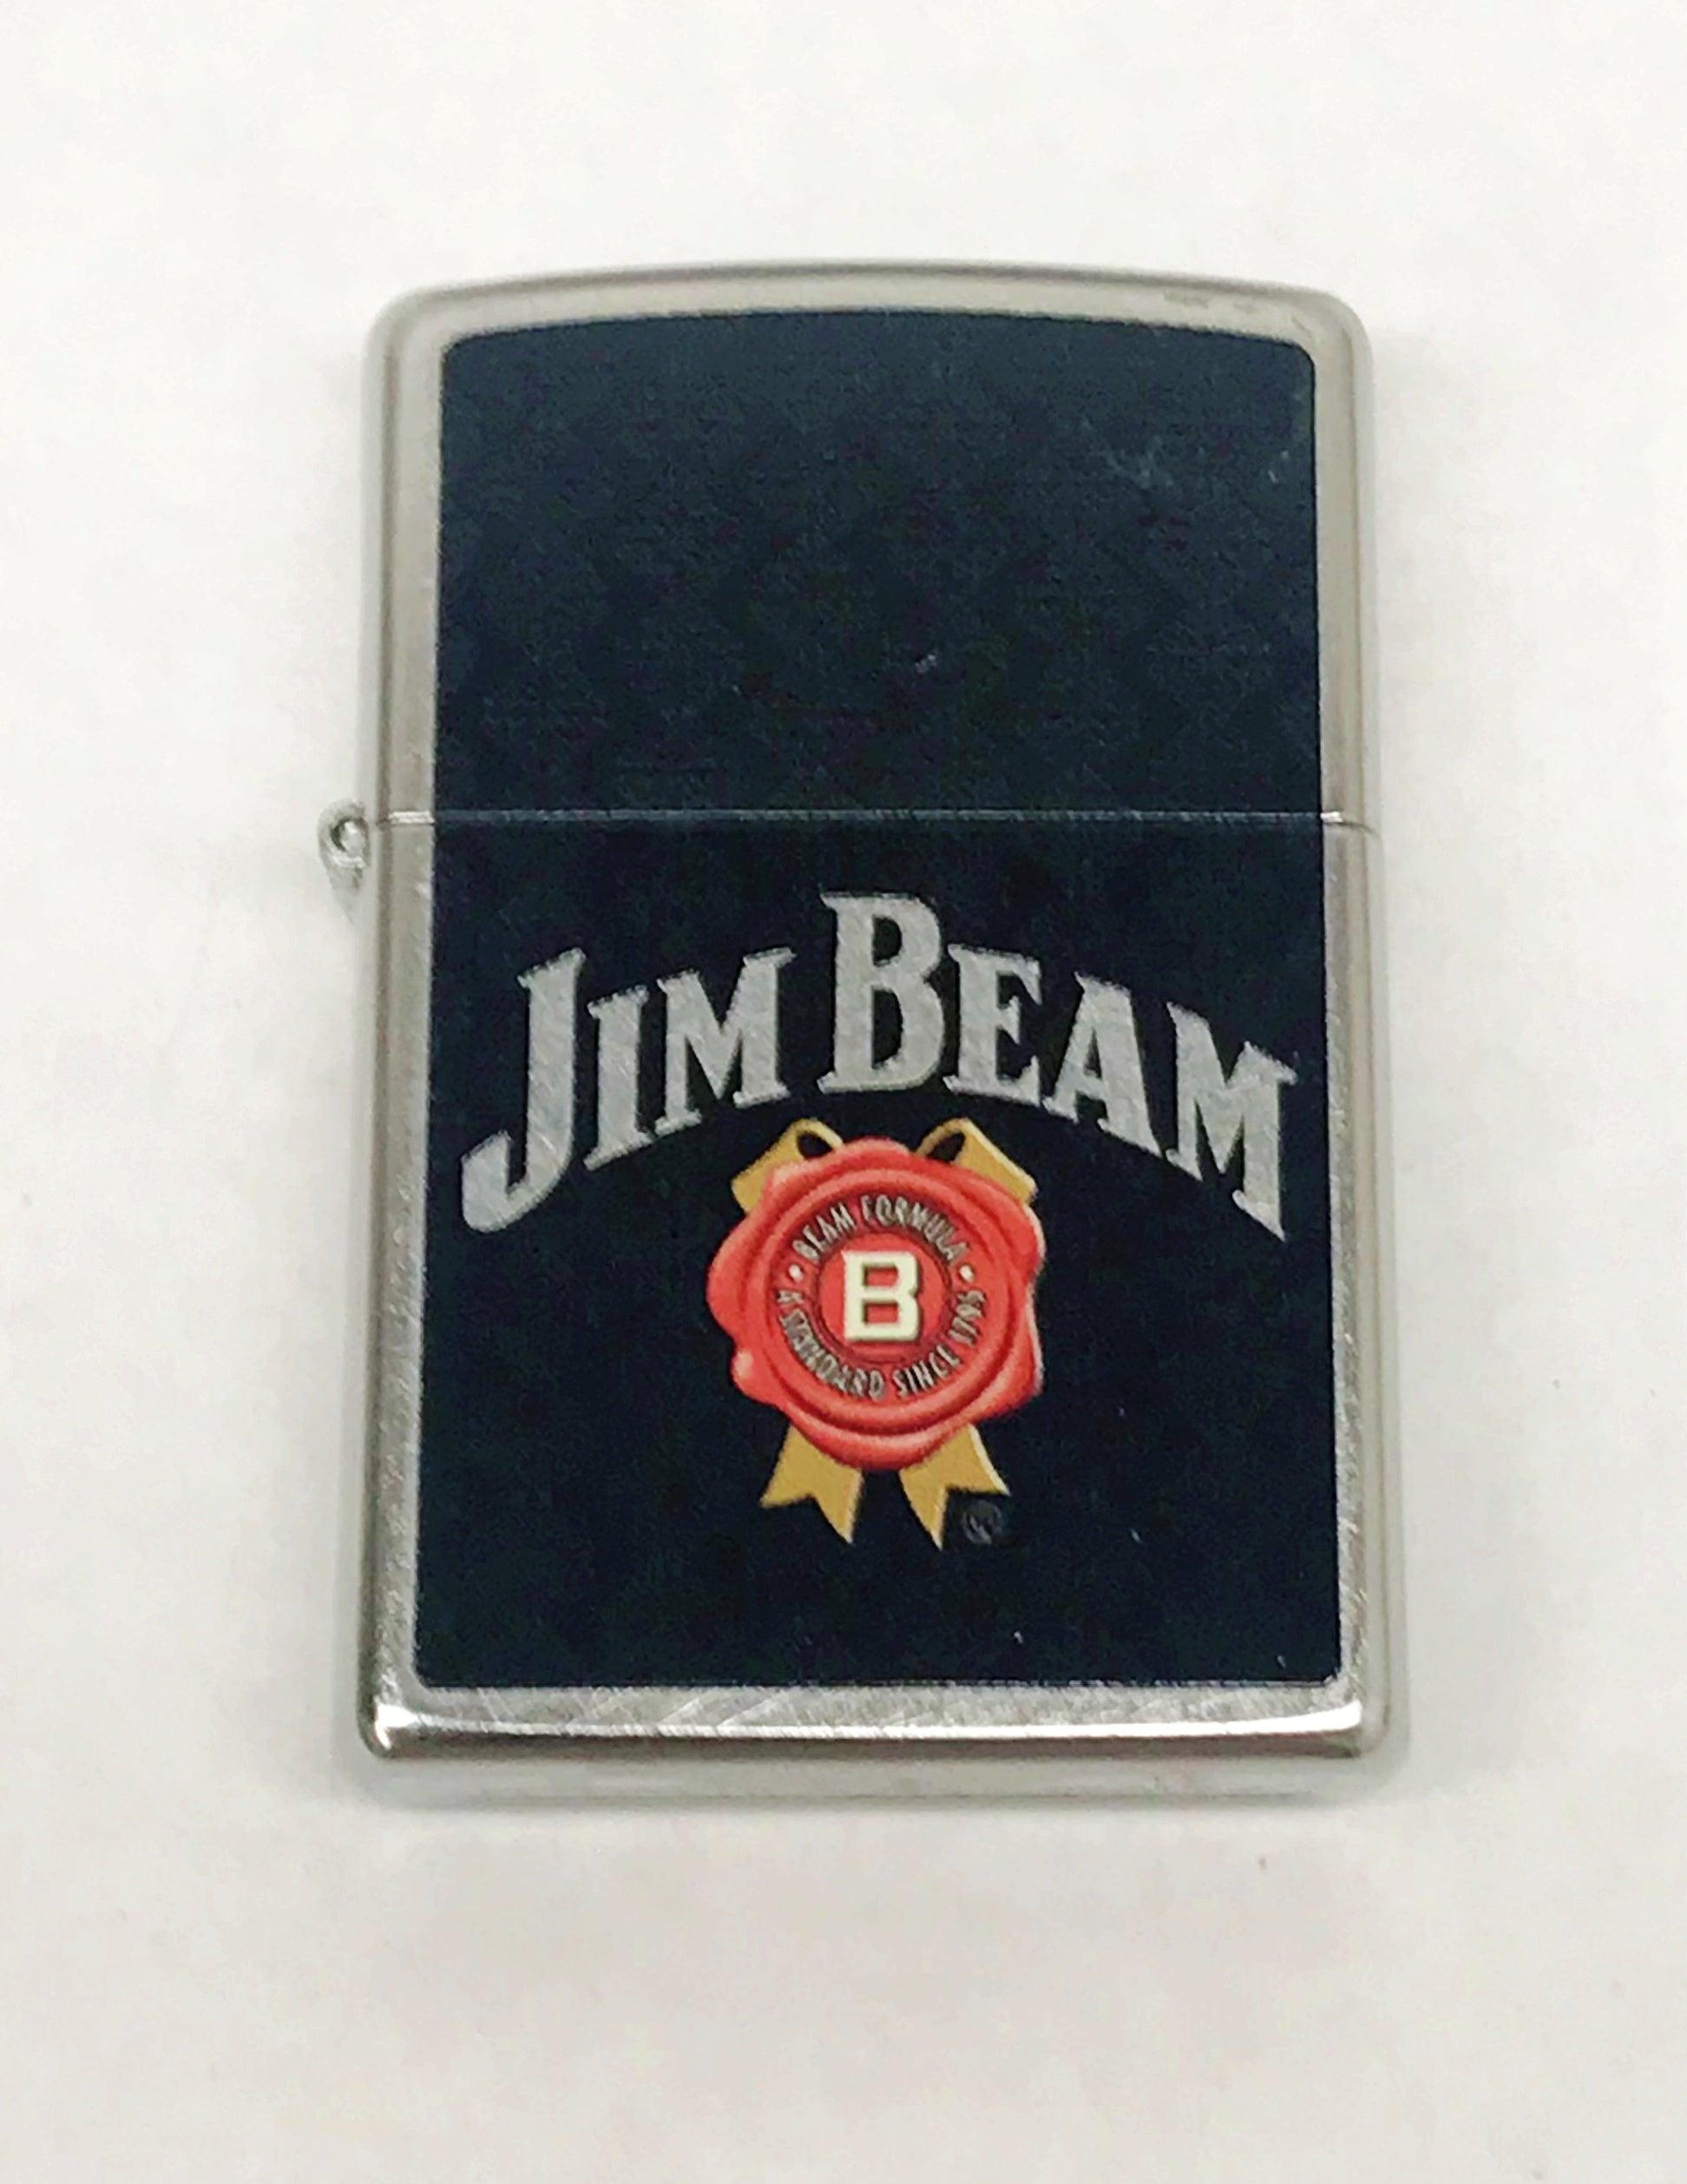 New 2013 Jim Beam Zippo Lighter